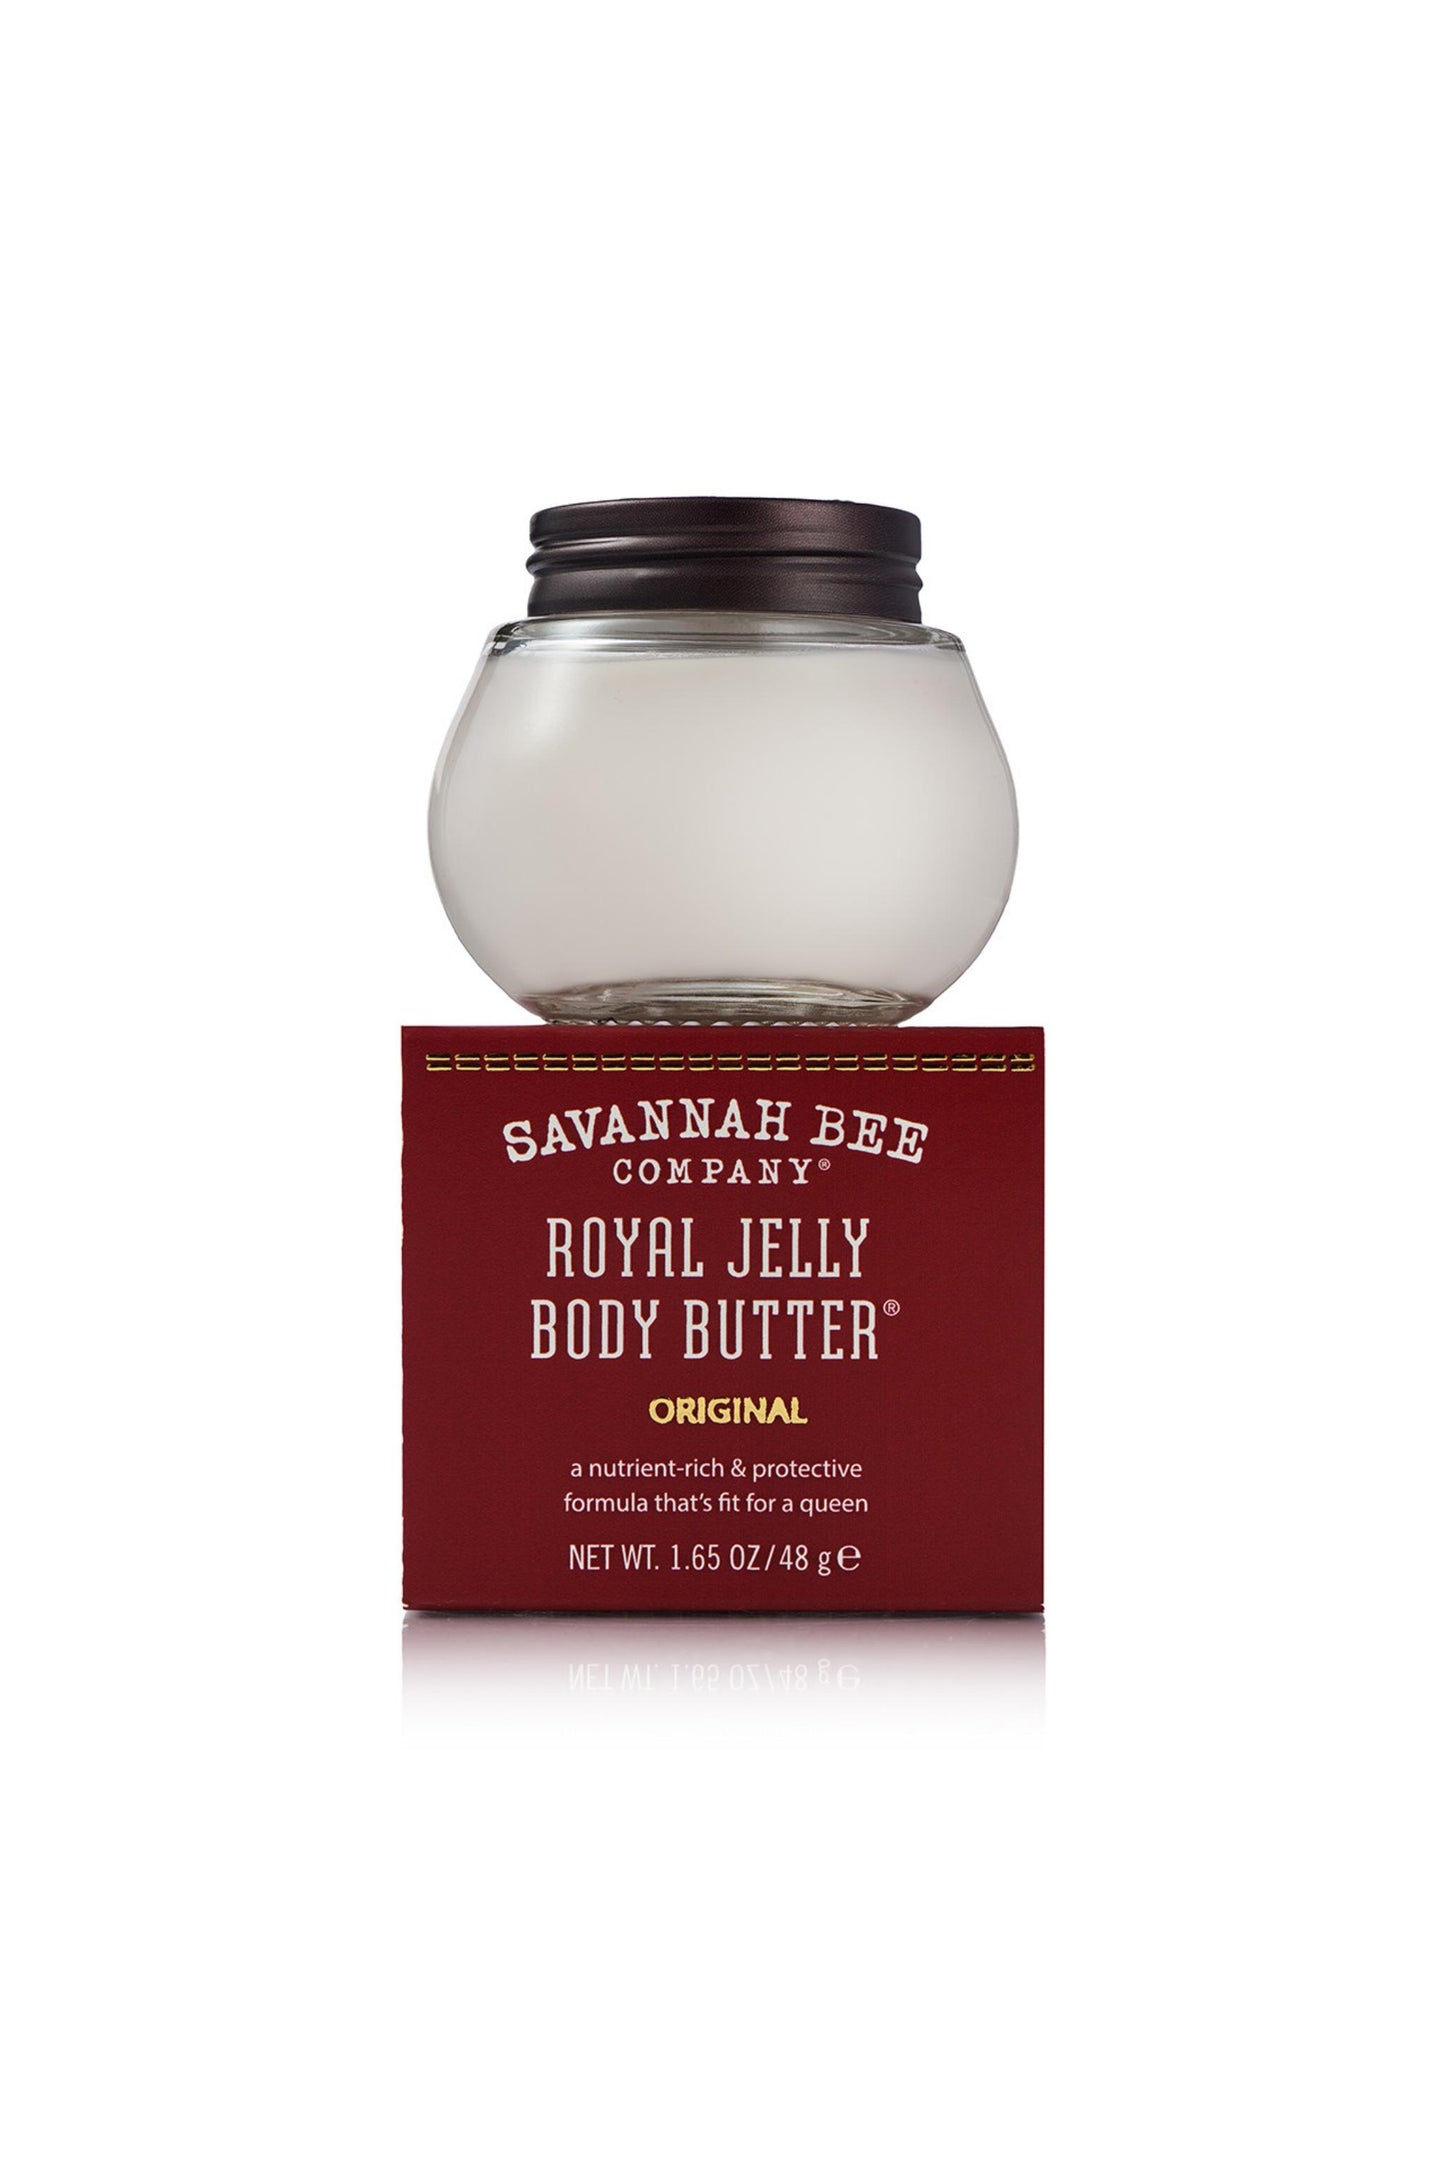 Royal Jelly Body Butter Original in a 1.65 oz. jar